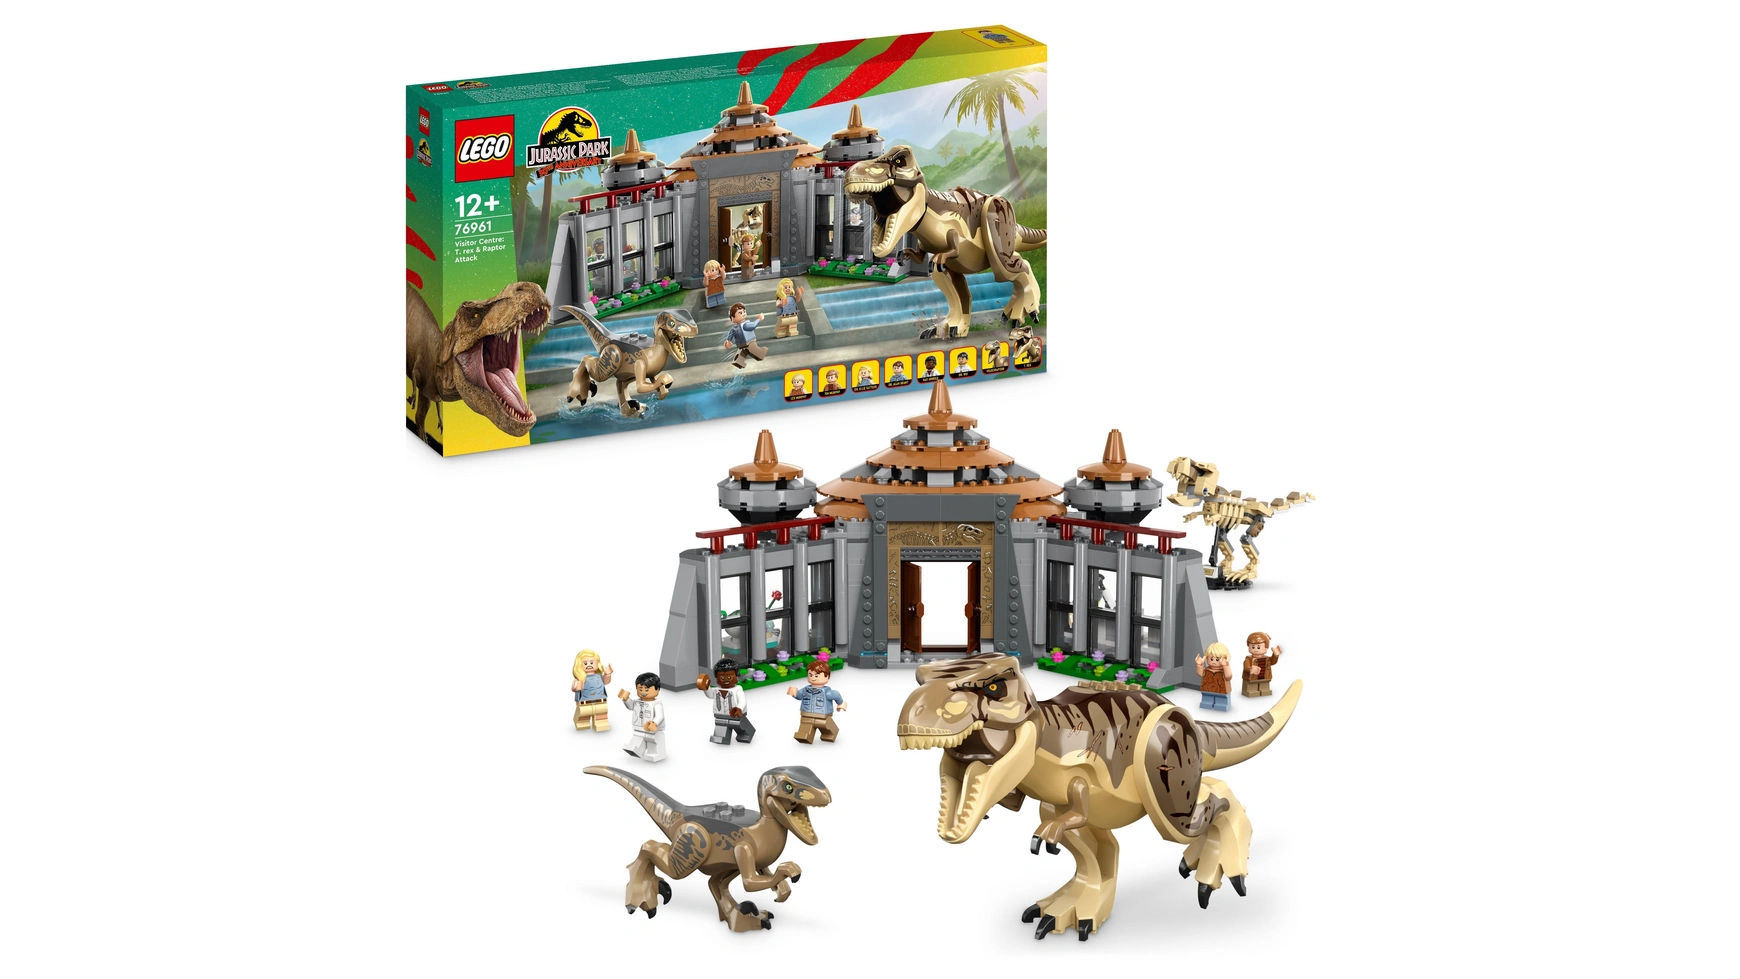 Lego Jurassic Park Ти-рекс и хищник нападают на центр для посетителей минифигурка lego jw059 dennis nedry jurassic park logo on back